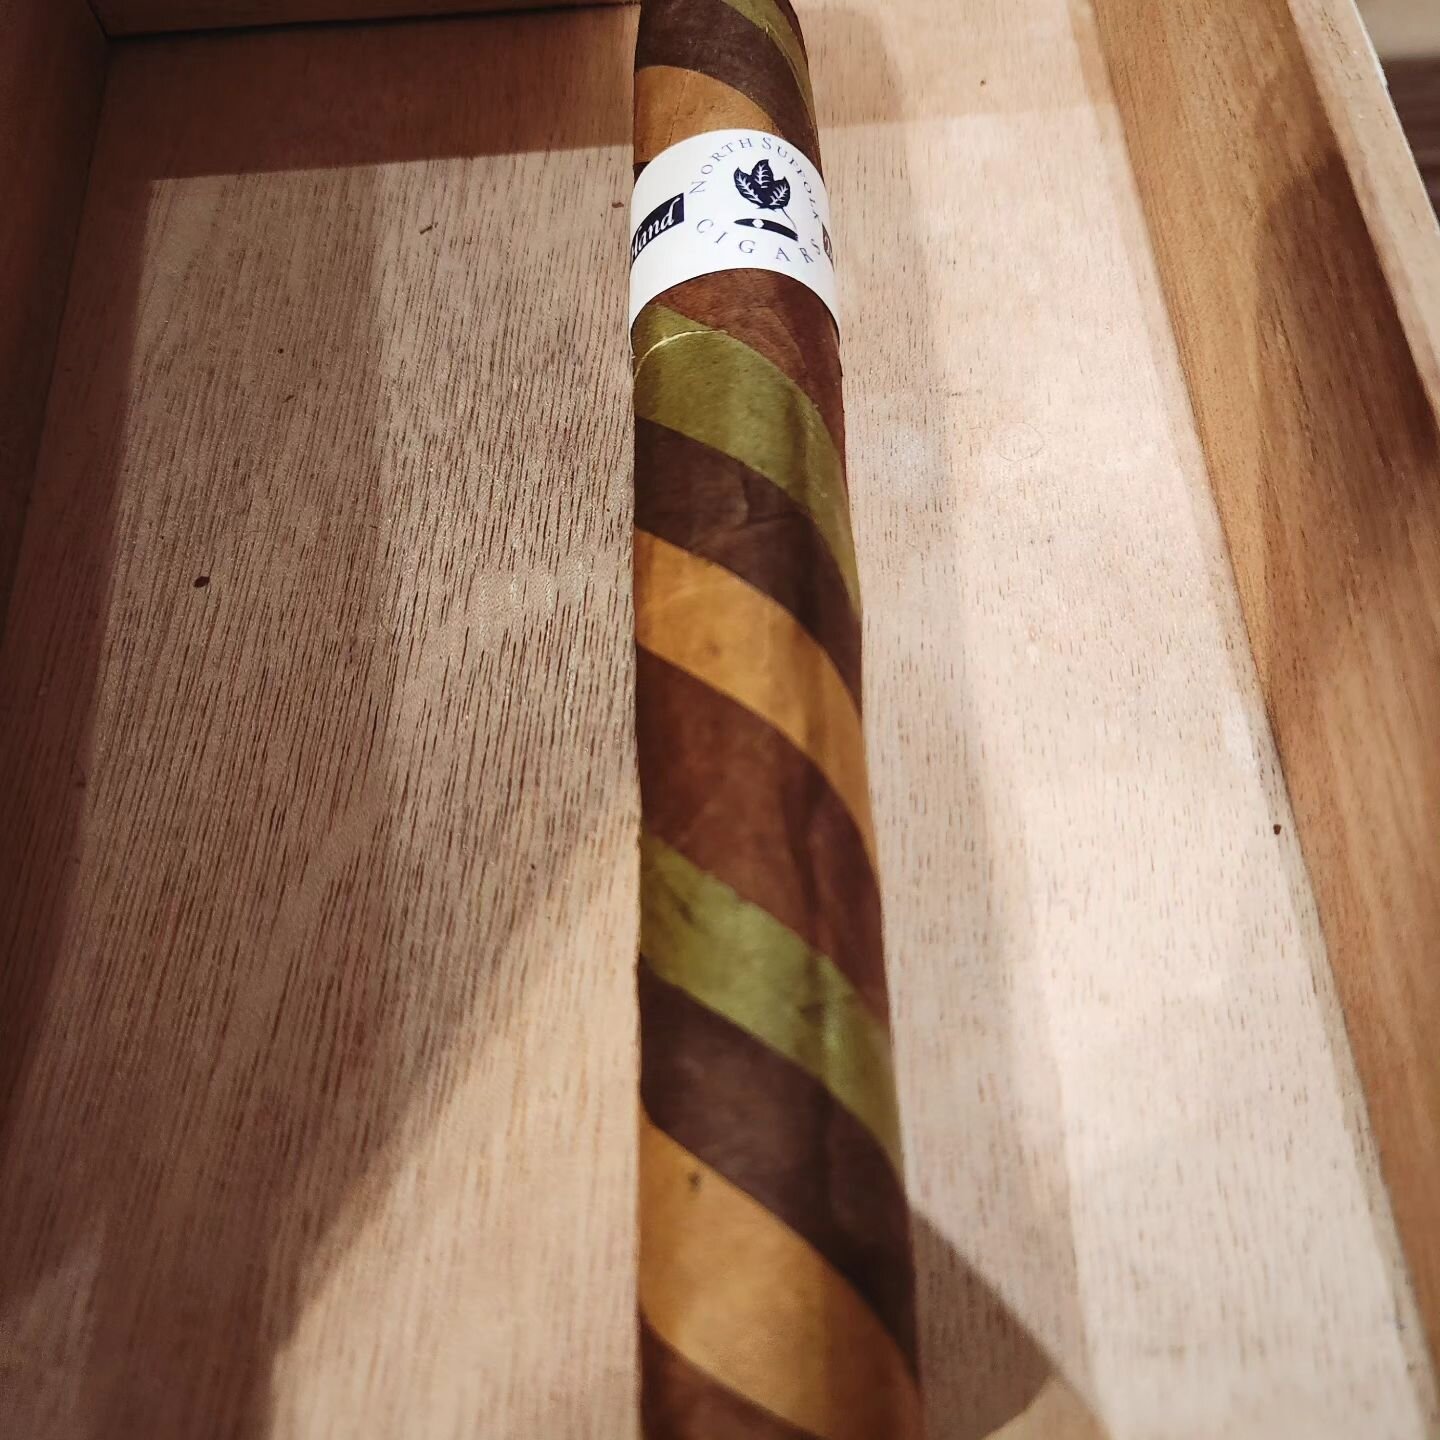 North Suffolk Cigars 
North Pole Barber Pole
Limited Edition House Stick
#nowsmoking #northsuffolkcigars #slickstickscigarclub #sailorsandsticks #goodtimegang 
#cigars #757cigarlounge